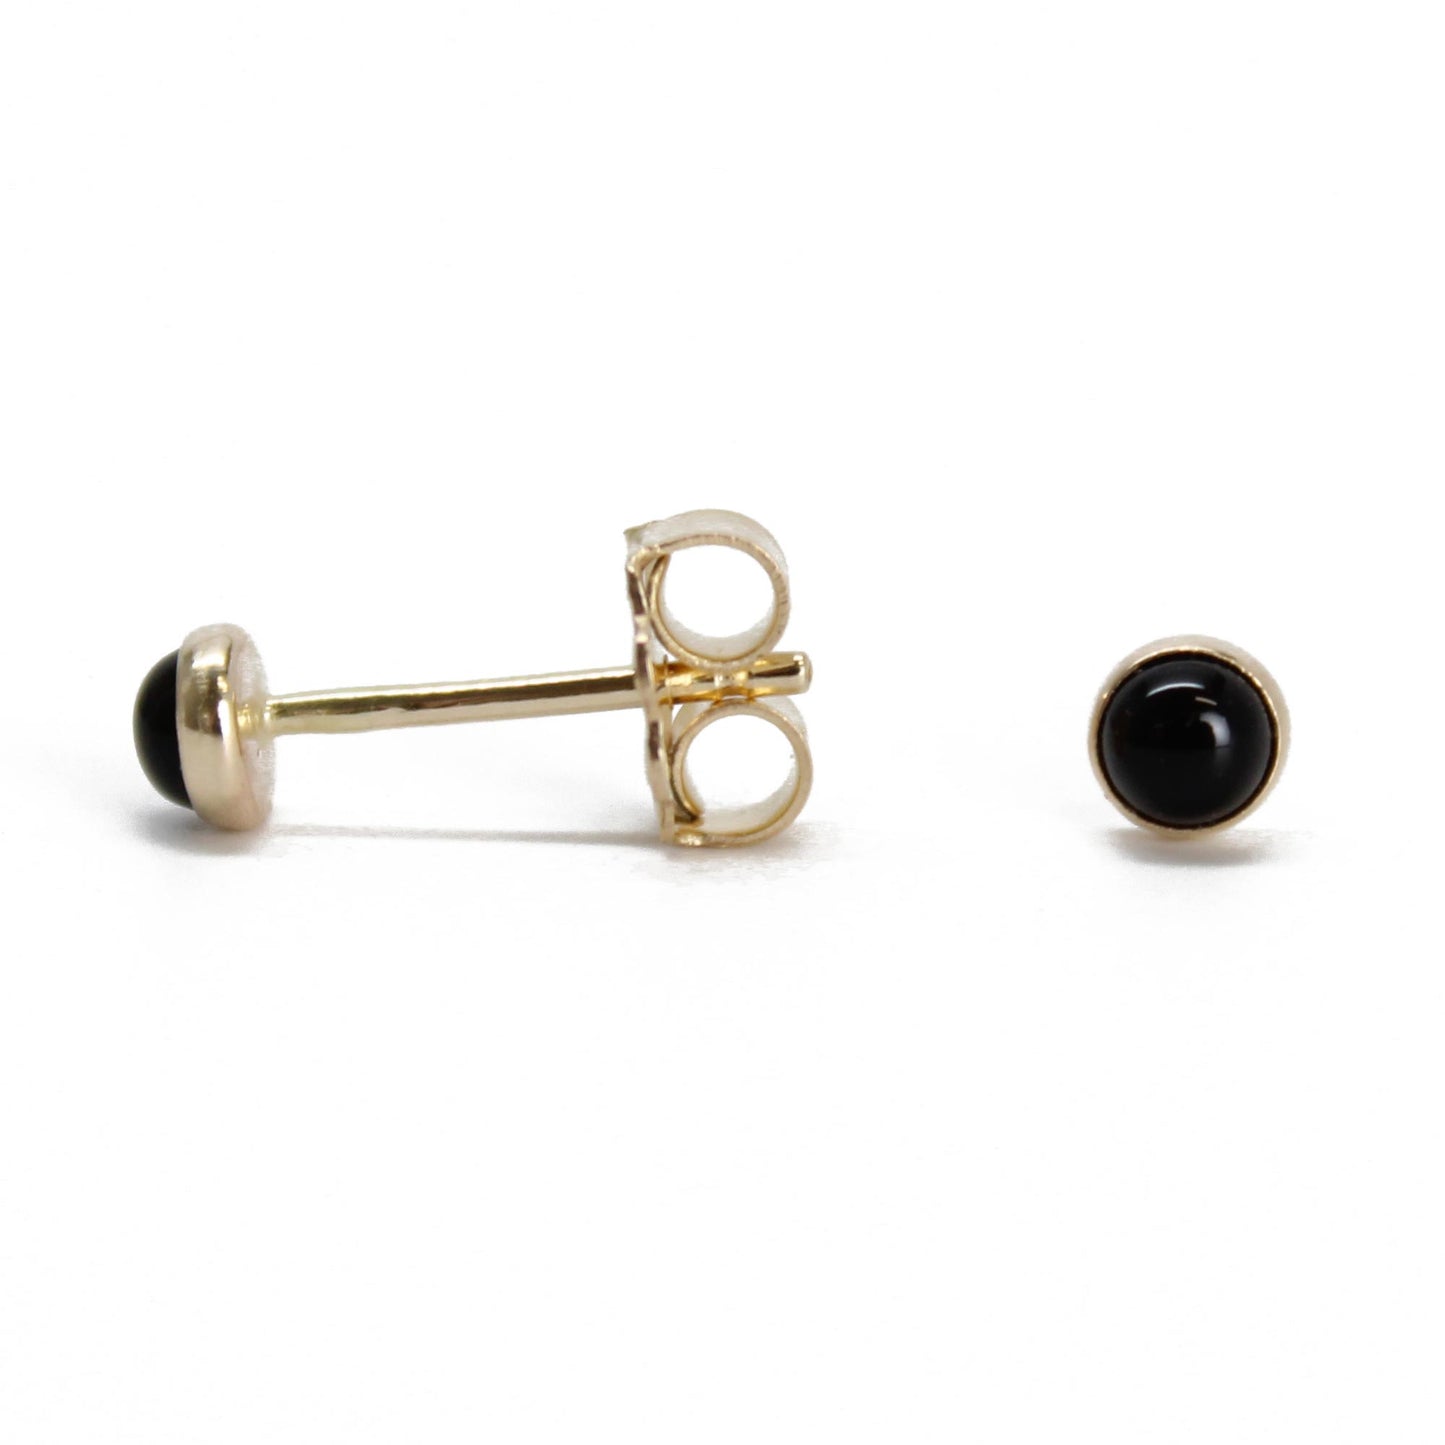 Black Onyx Stud Earrings, Tiny 3mm Studs